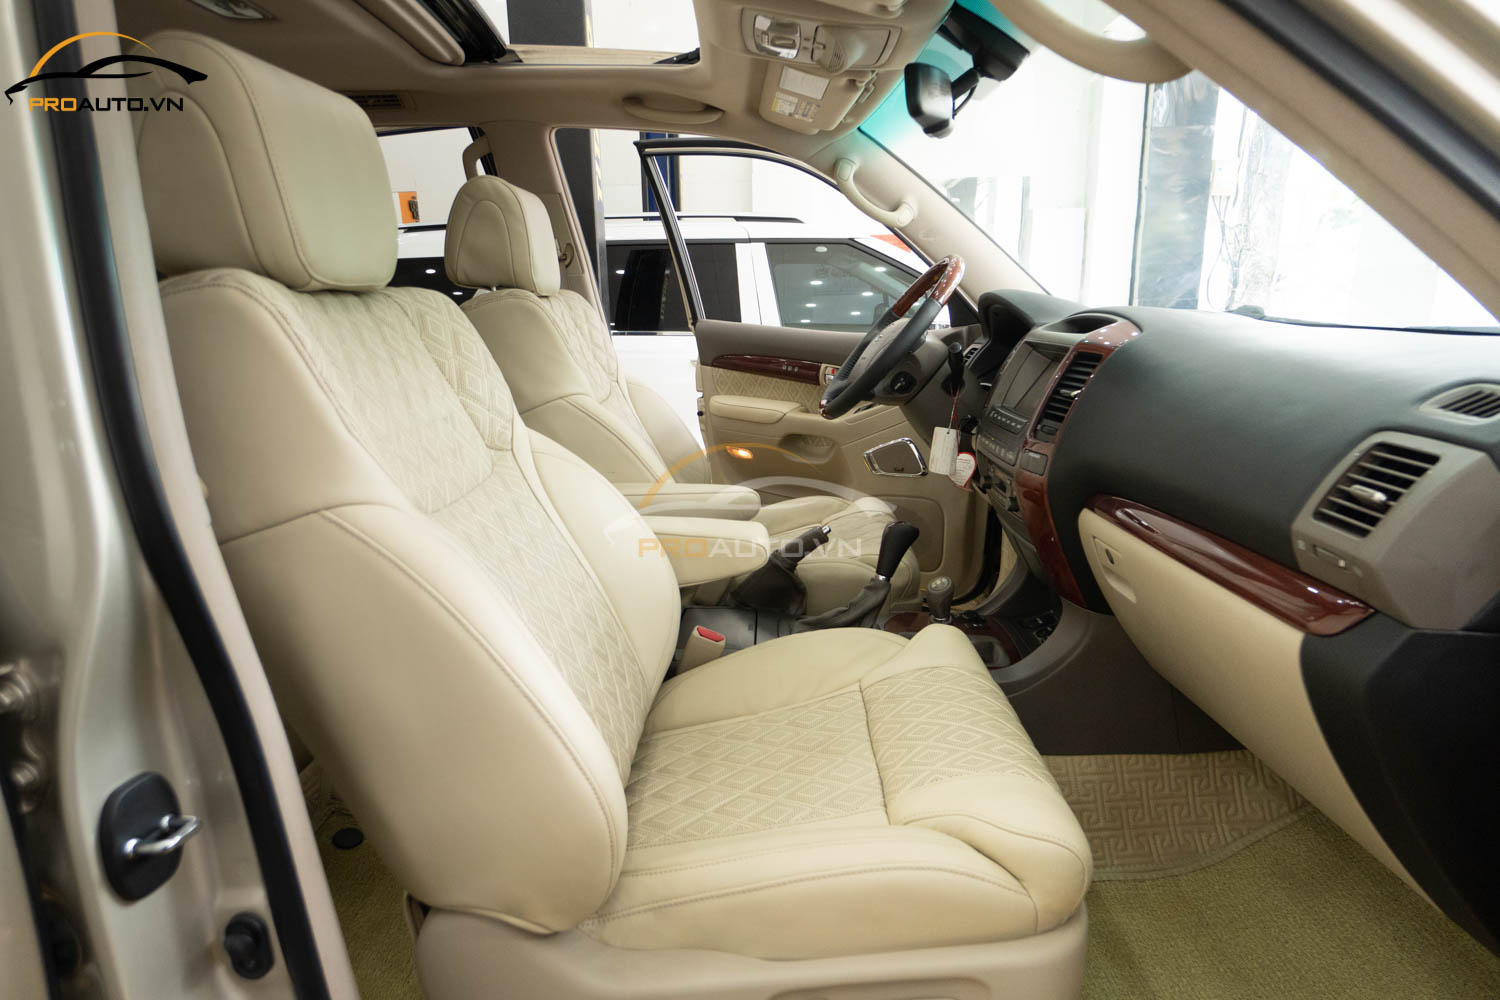 Bảng giá độ ghế Limousine xe Lexus GX 470 7 chỗ